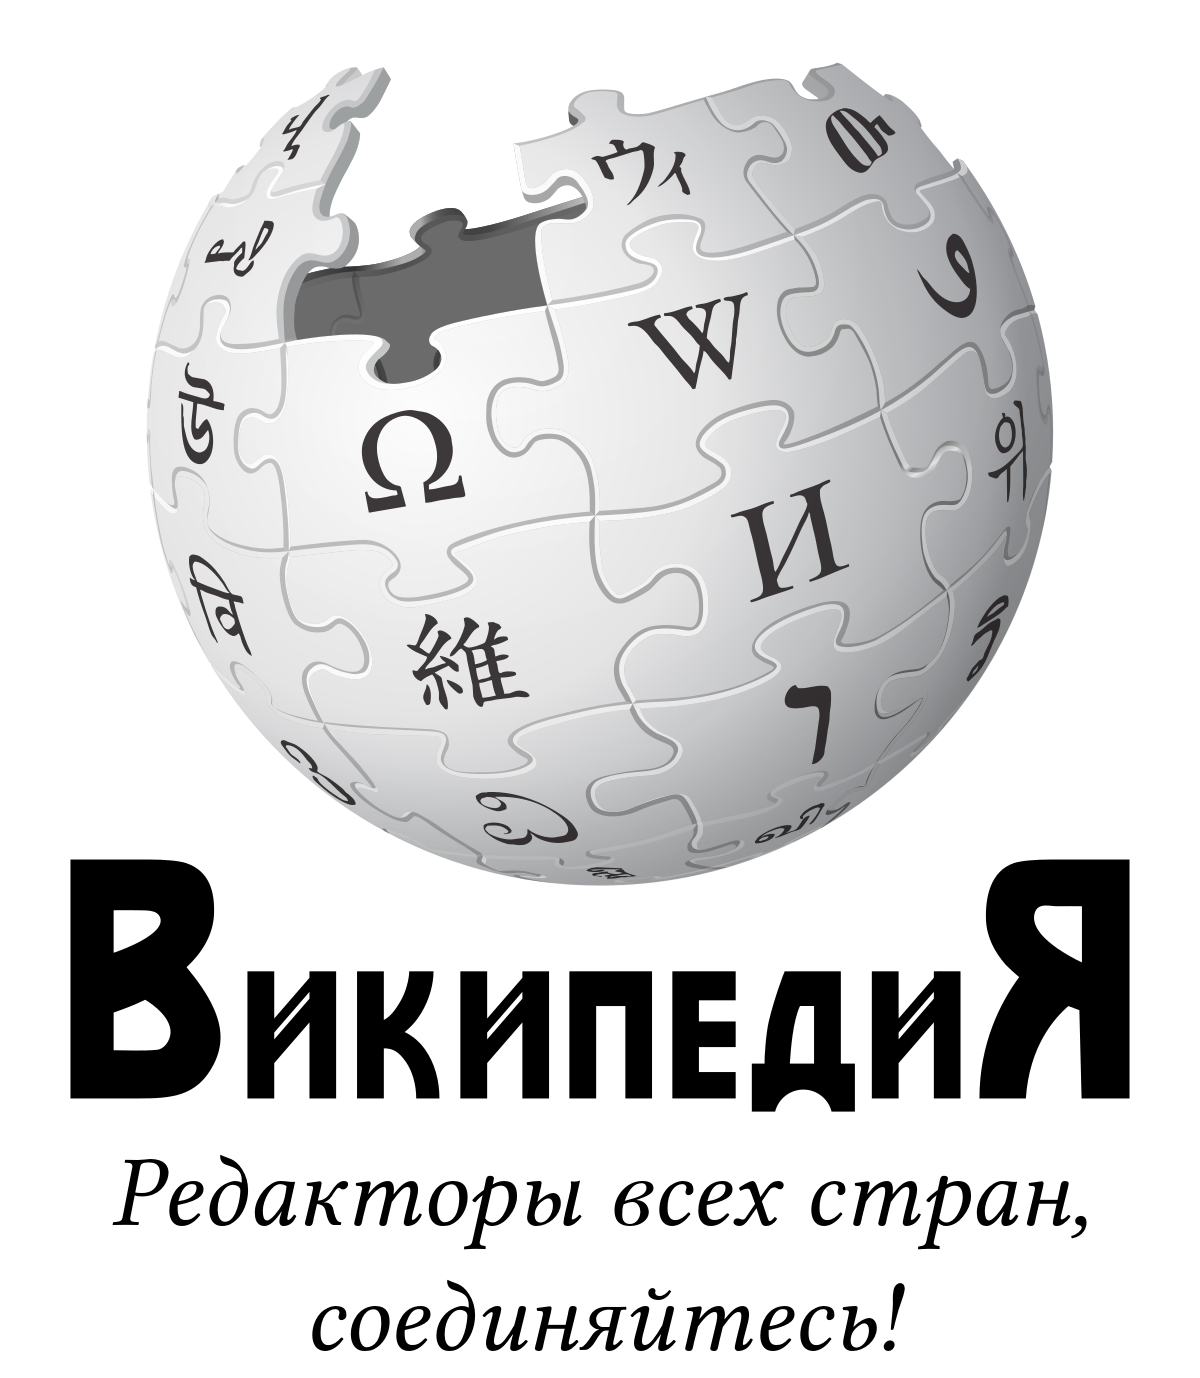 Дата википедия. День рождения Википедии. 1с Википедия. Логотип Википедии 1 вариант. Вдосталь Википедии.